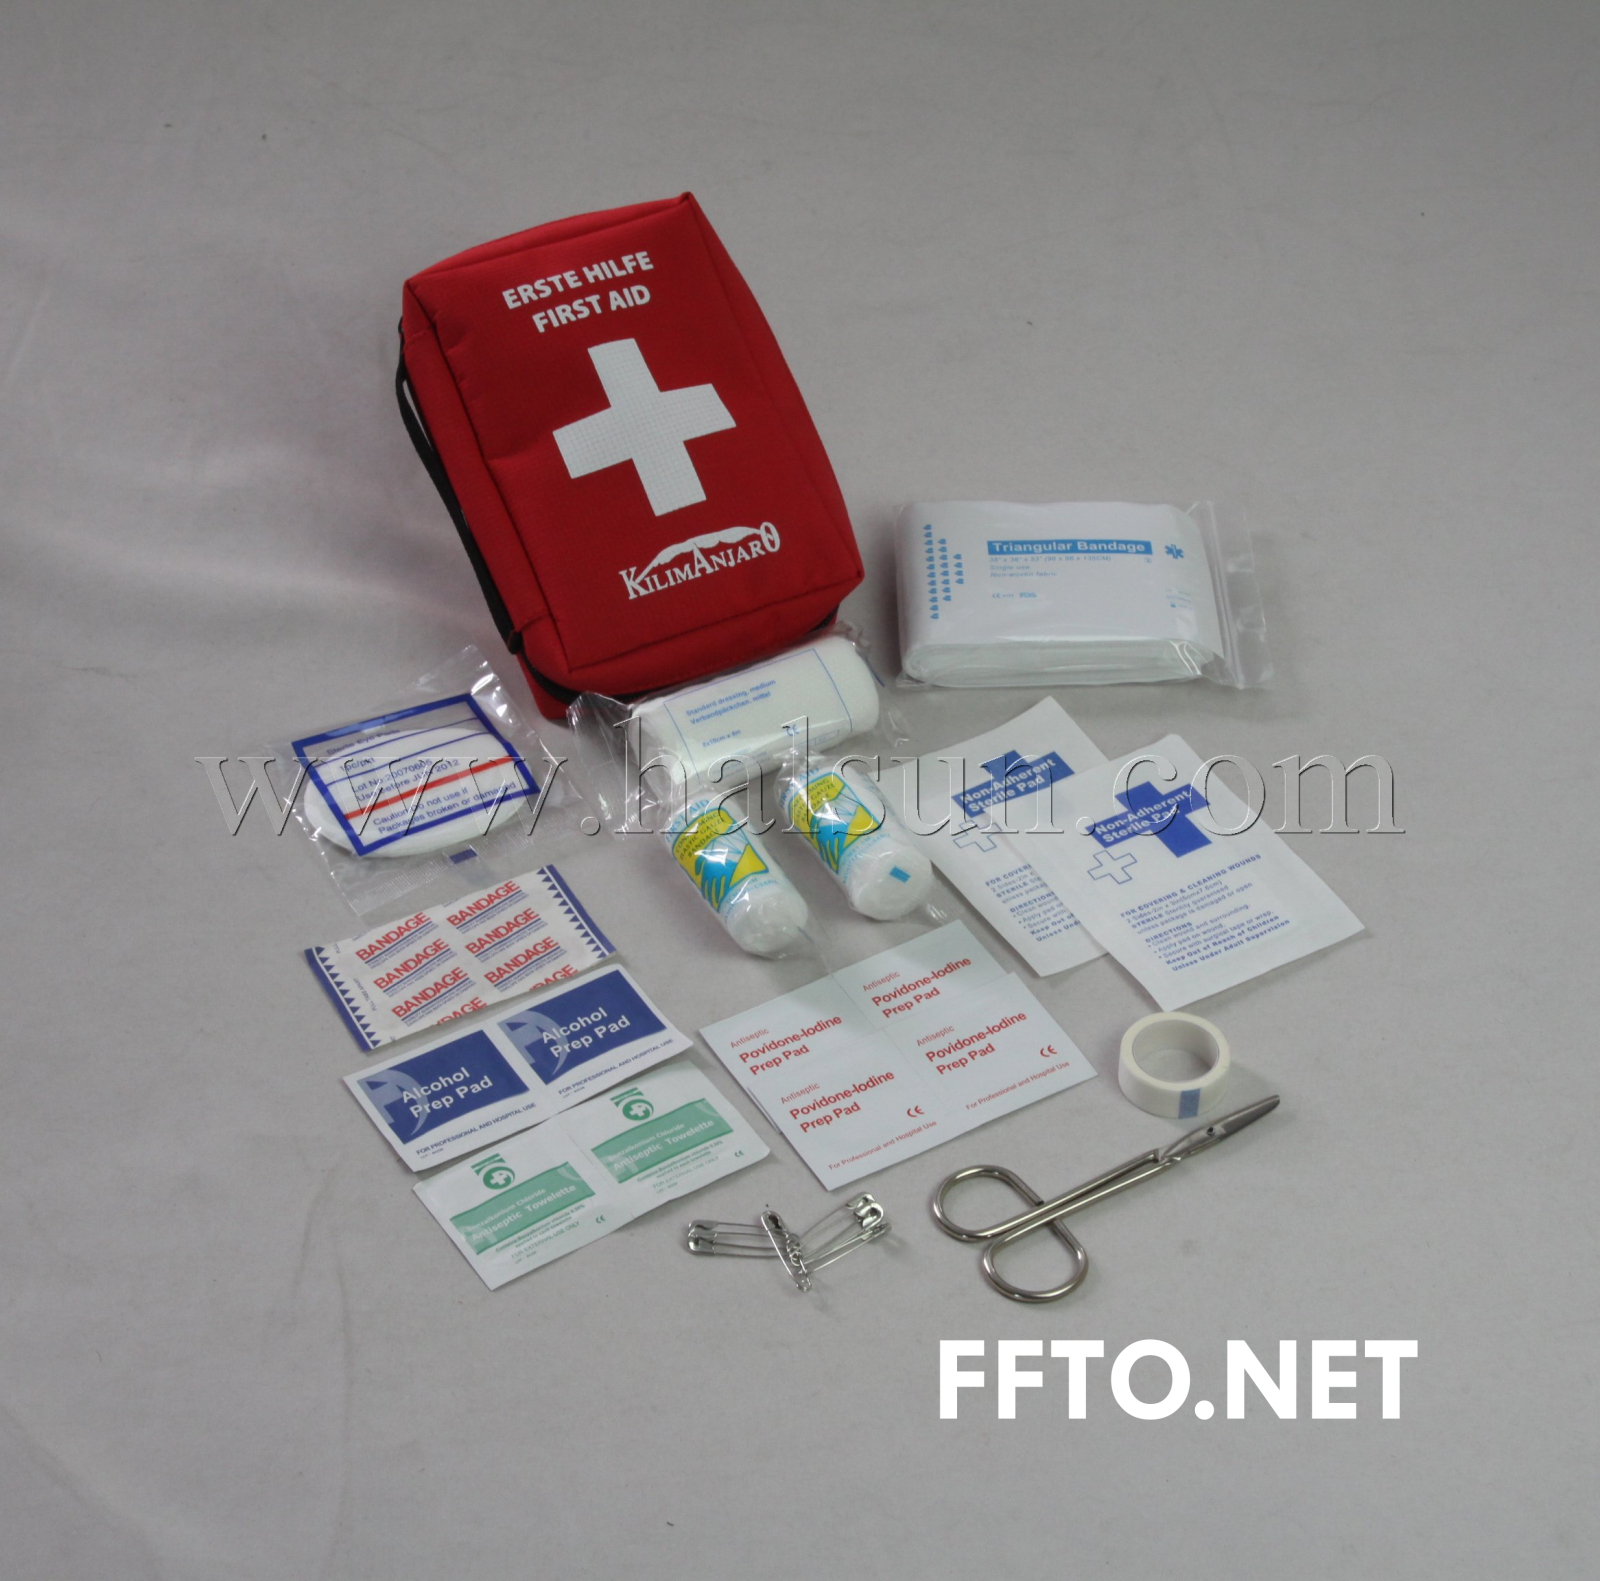 First Aid Kits,HSFAK042